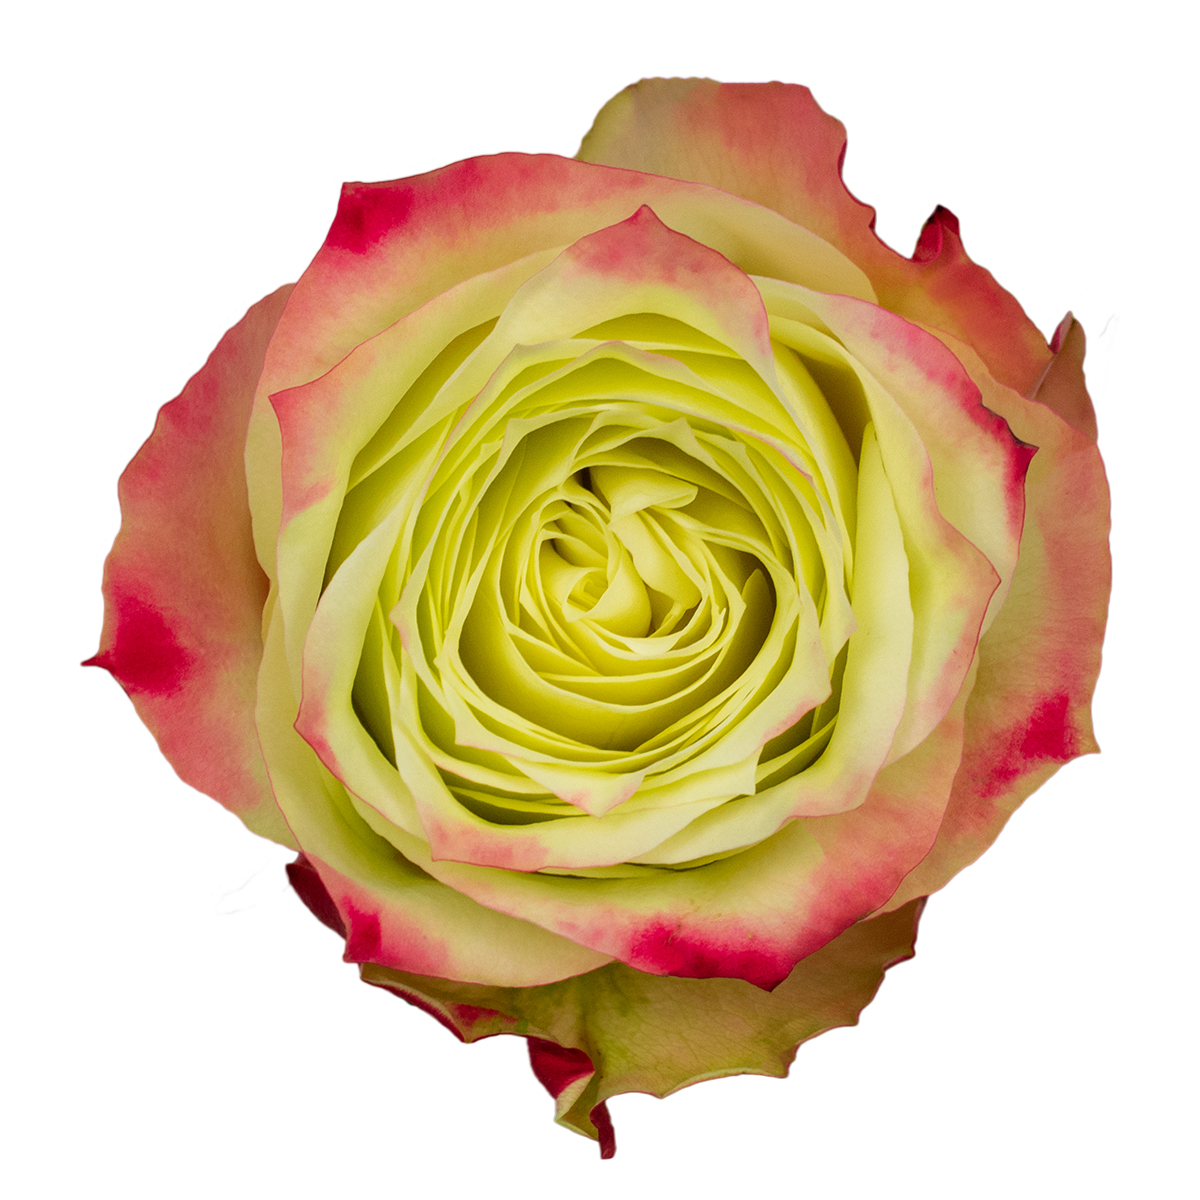 FAIRY QUEEN rose - Florist Rose Paradise! - Decofresh TOTF2020 on Thursd